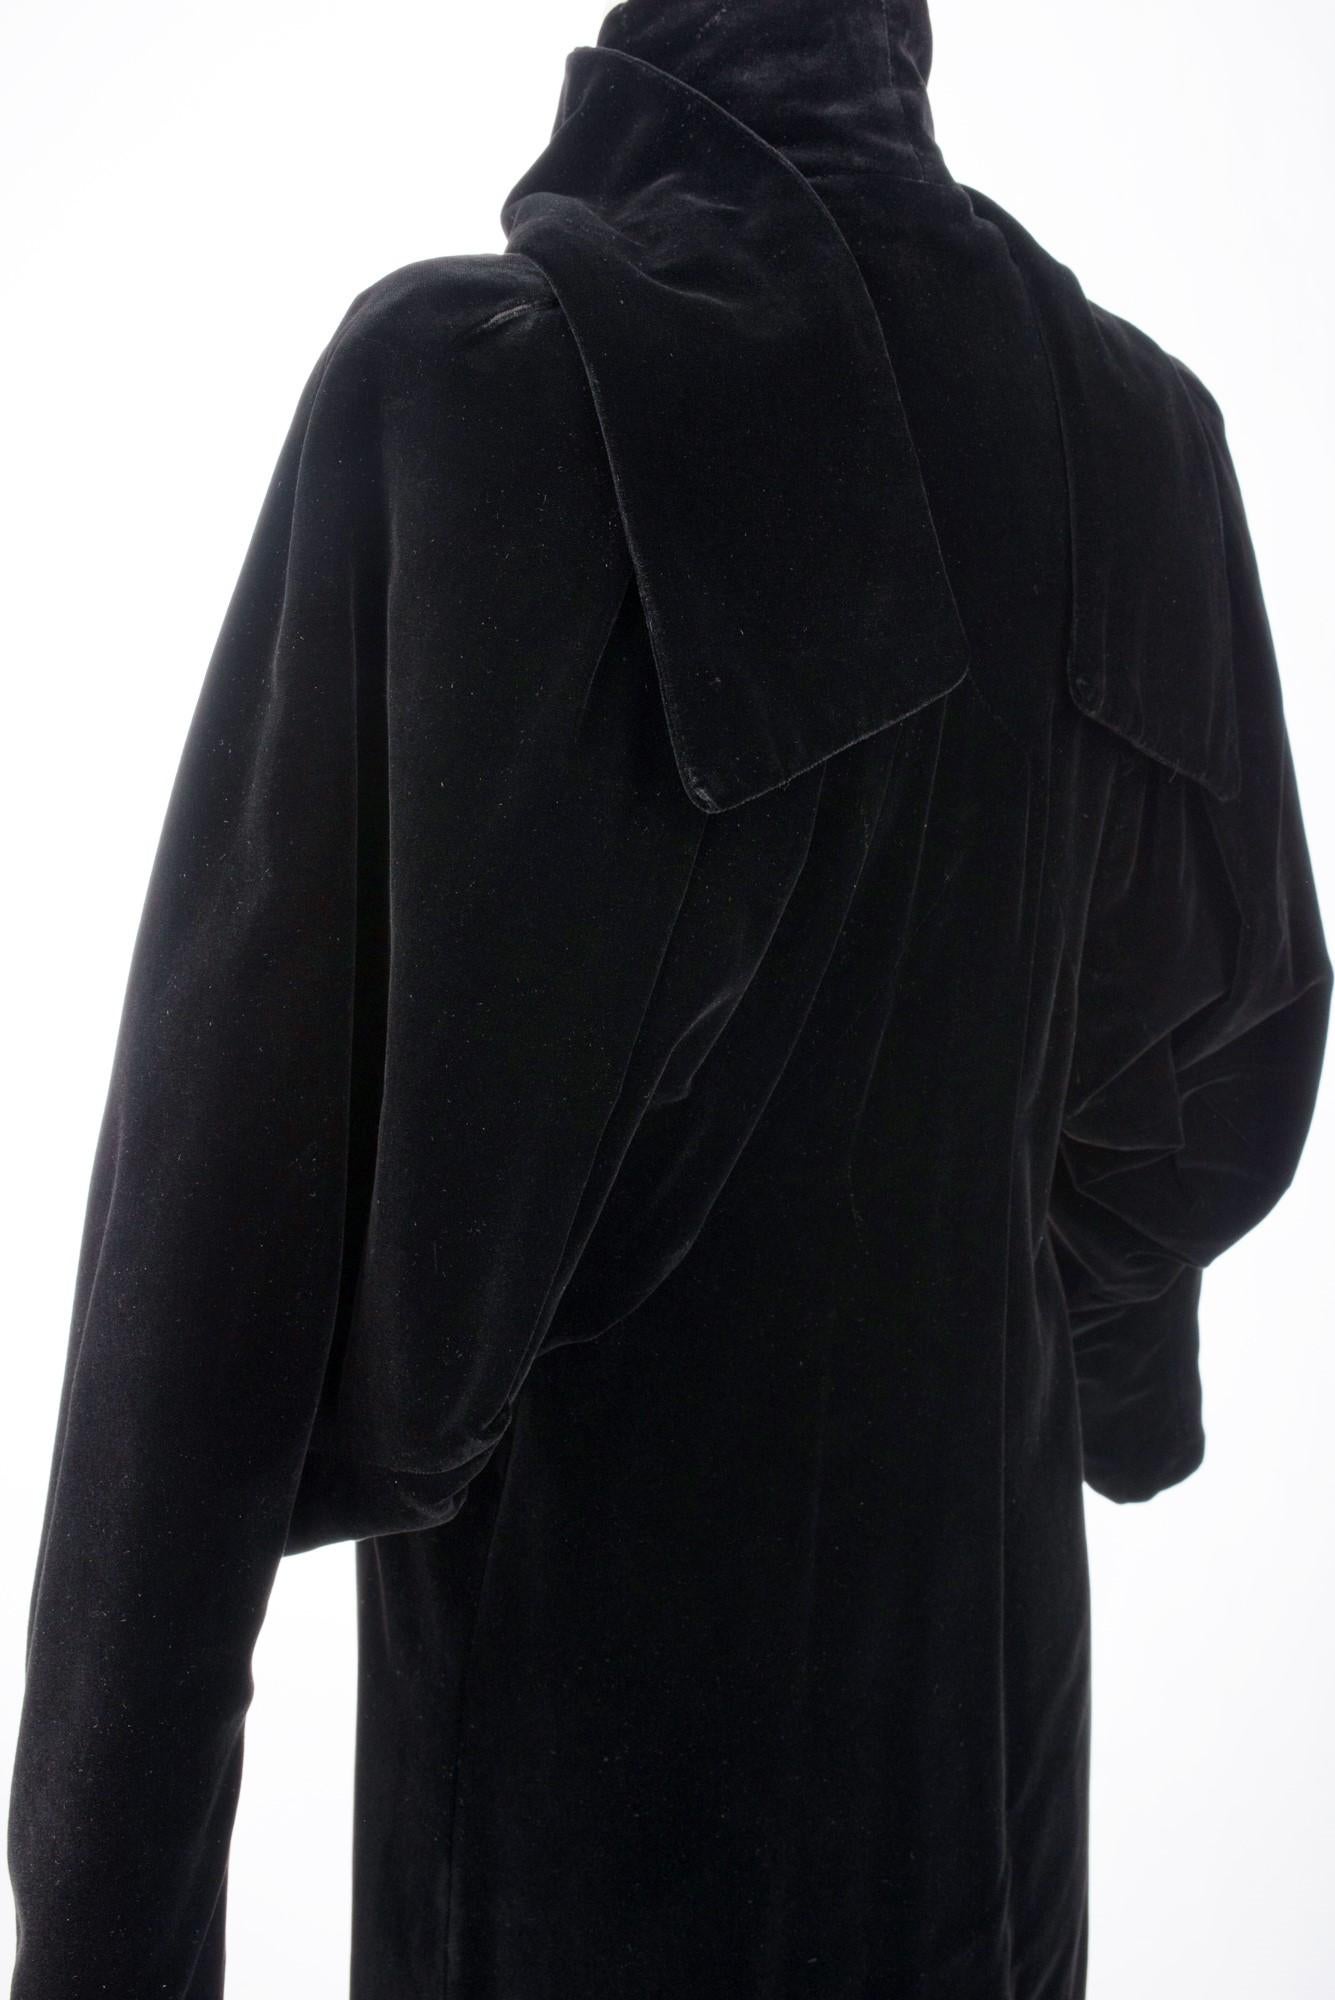 A Rare Black Silk Velvet Evening Coat by Lucien Lelong Circa 1937 For Sale 8